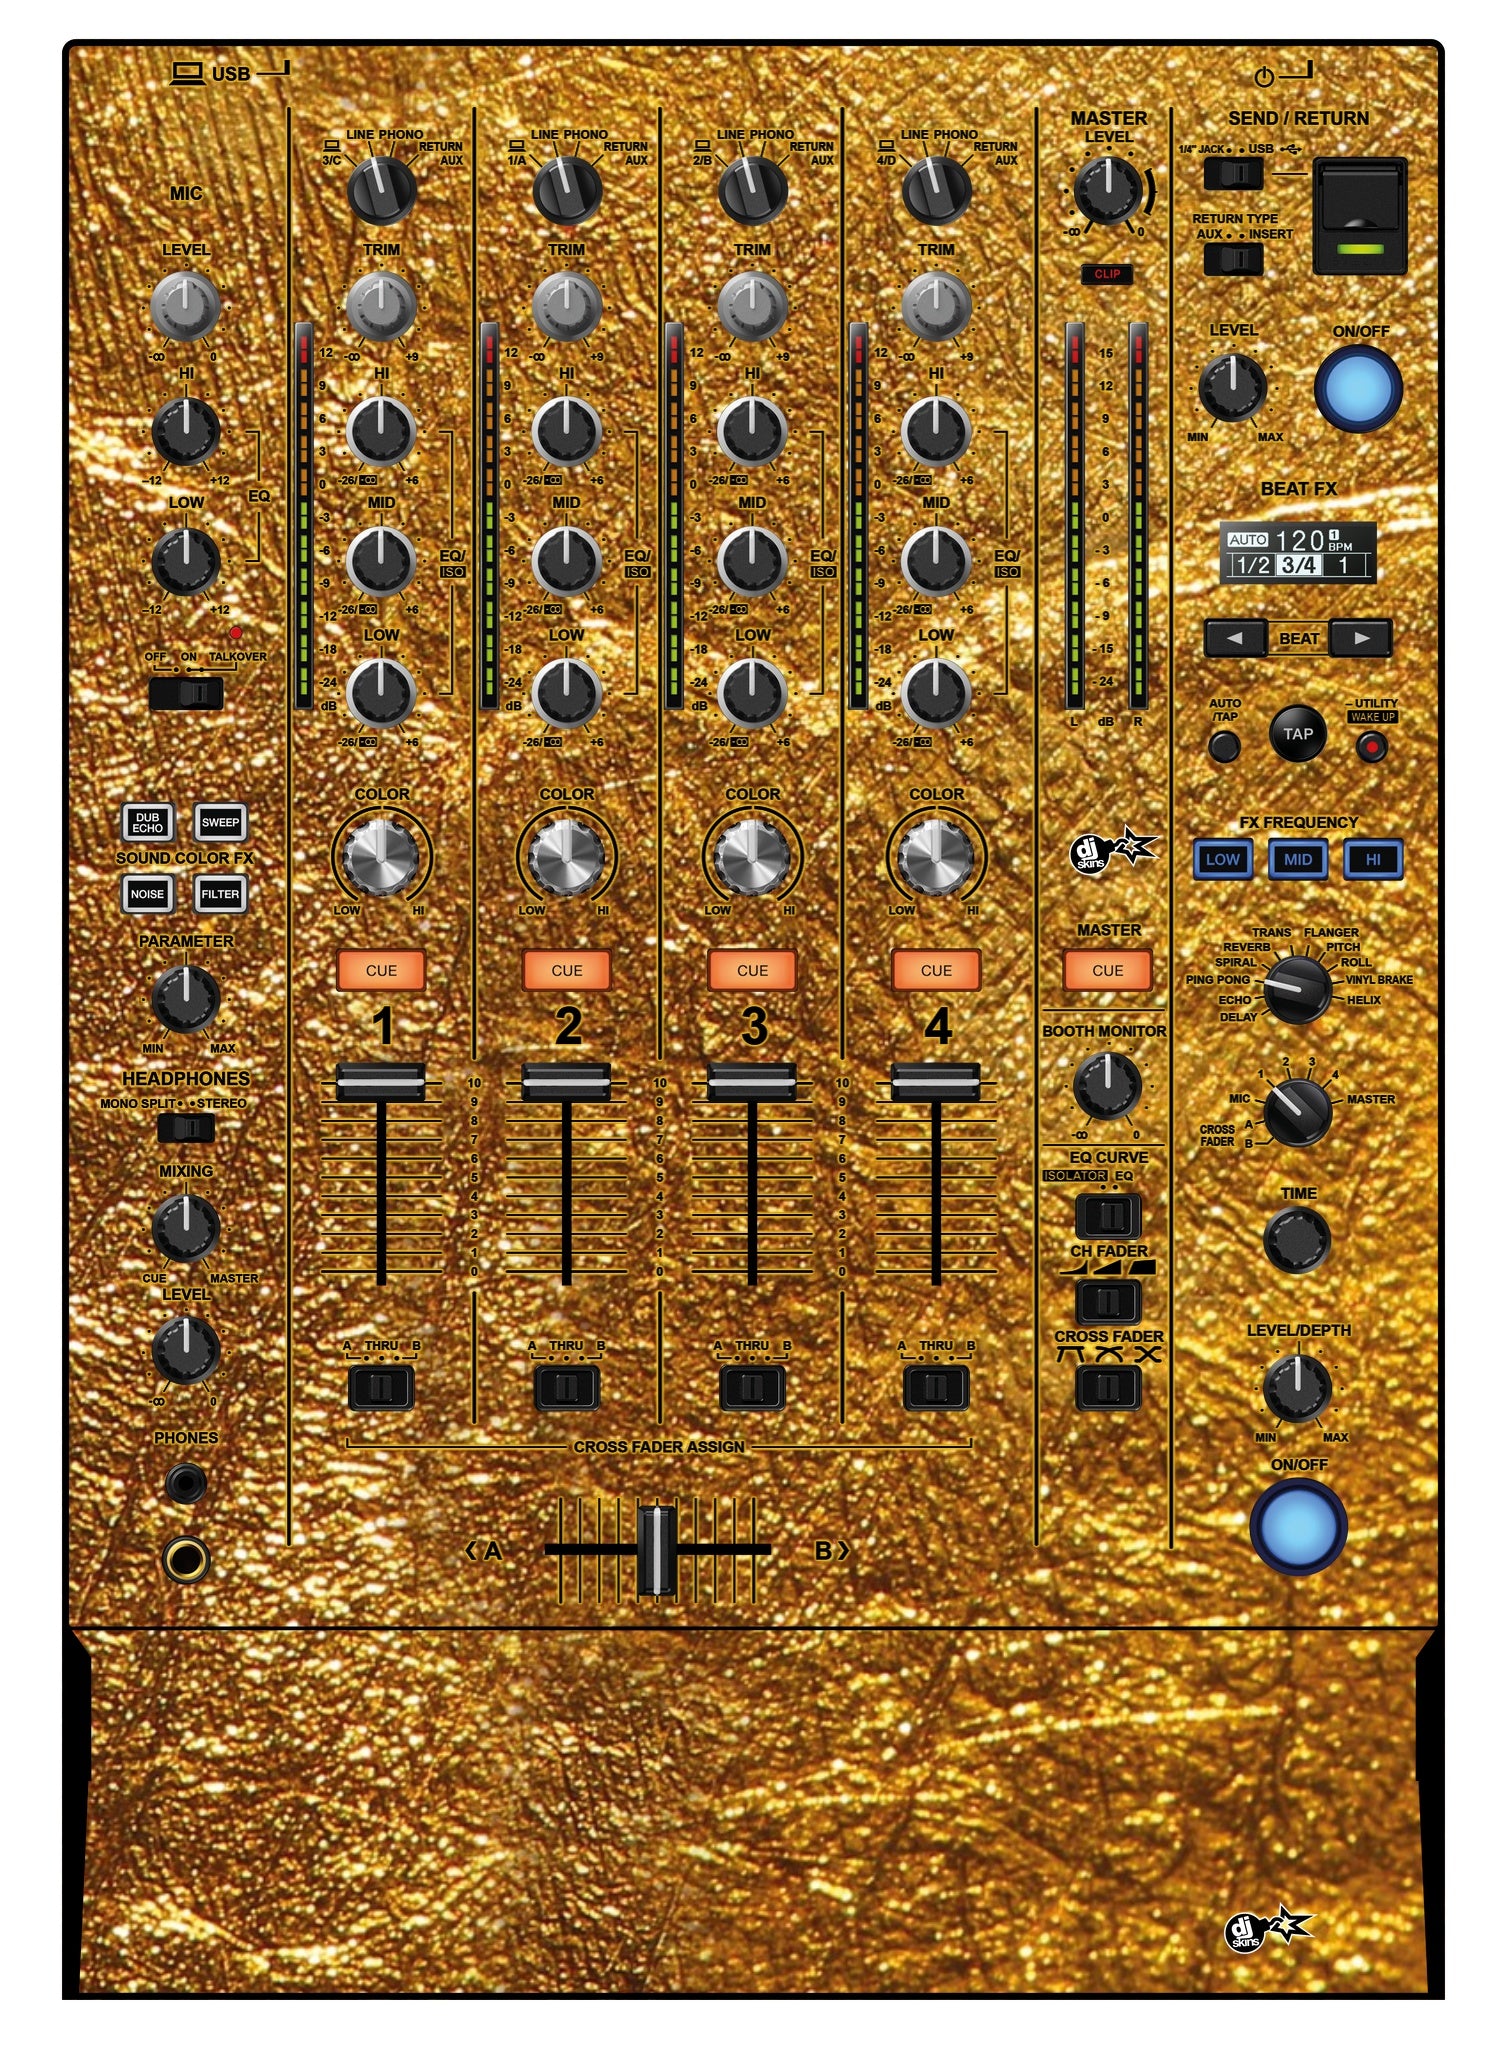 Pioneer DJ DJM 750 MK2 Skin Golden Treasure